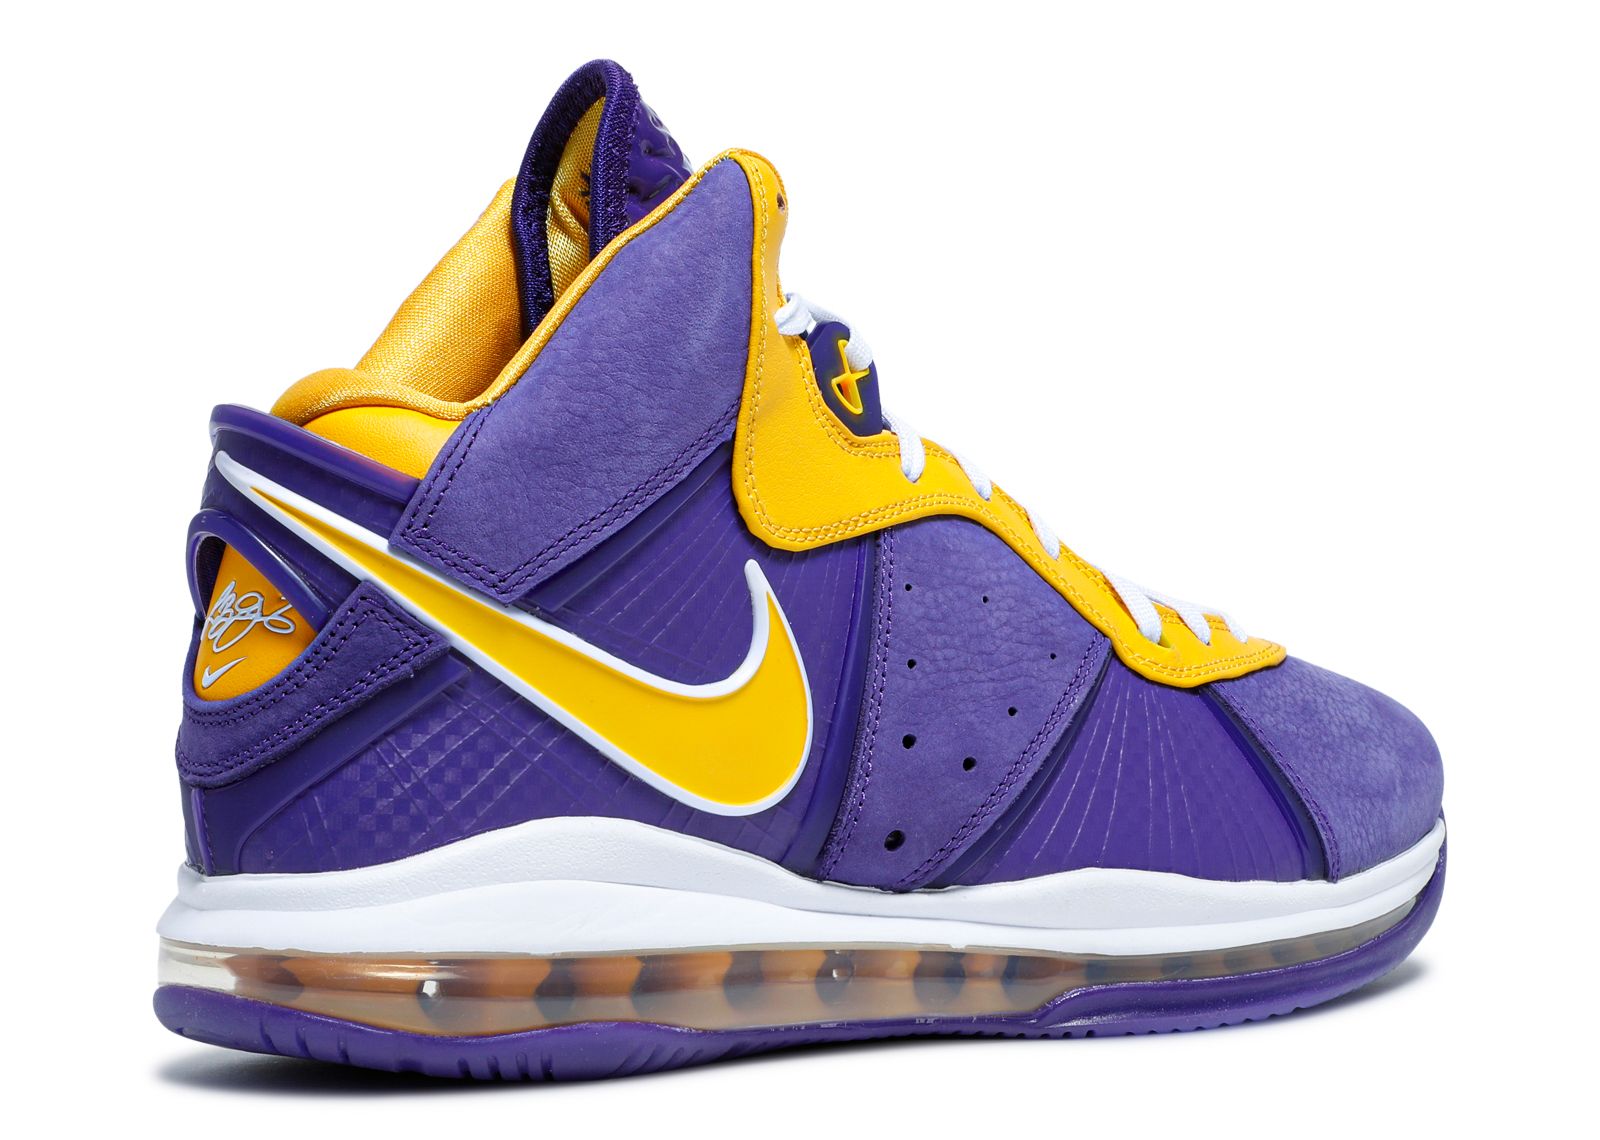 Nike LeBron 8 Lakers 11.5 / Purple